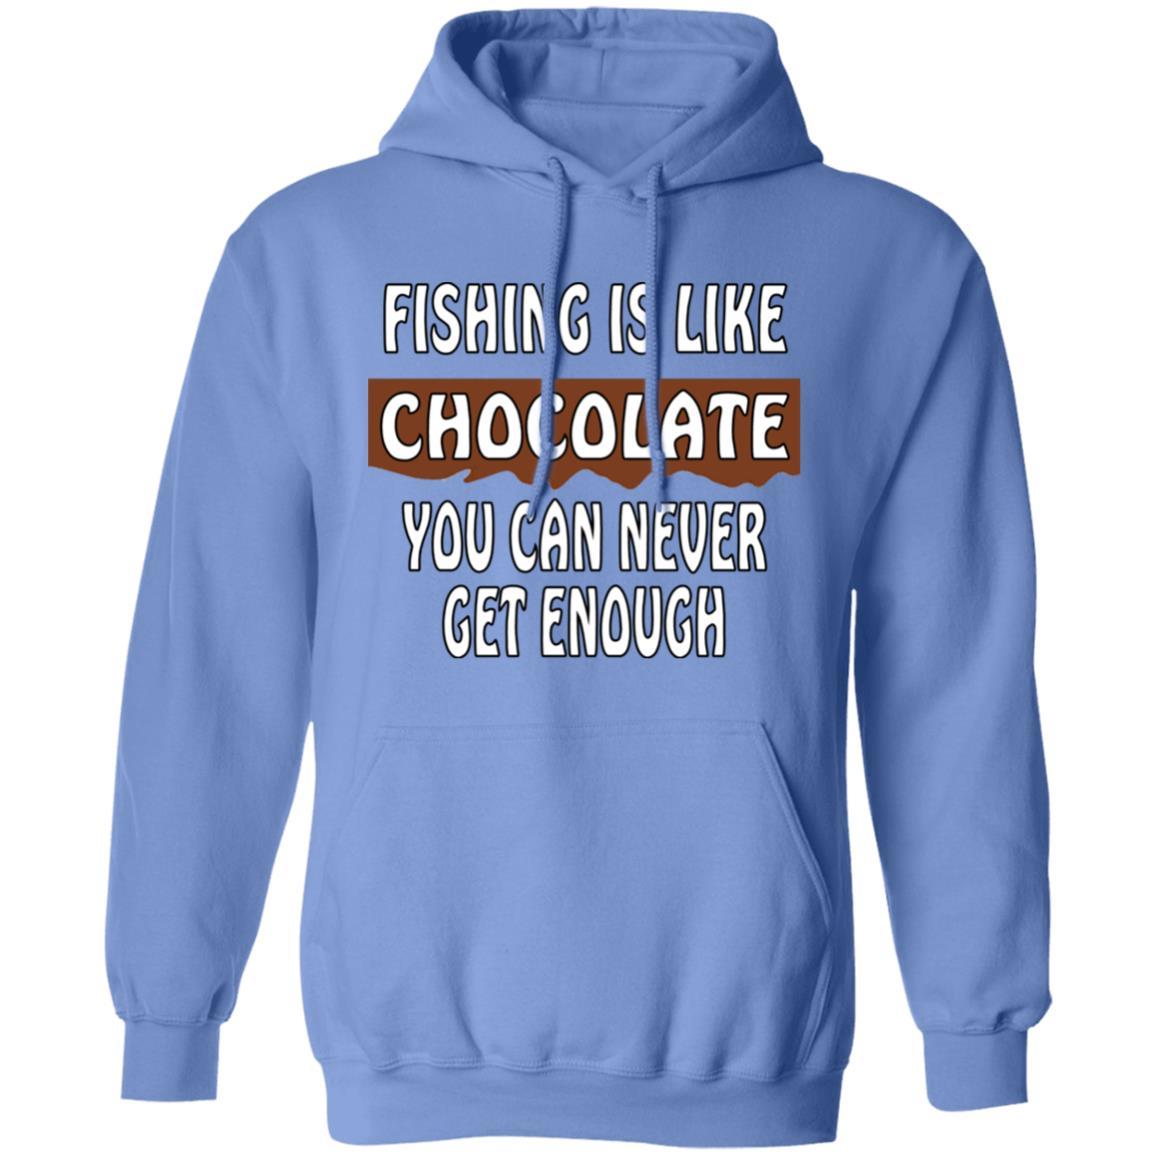 Fishing is like chocolate you can never get enough hoodie carolina blue